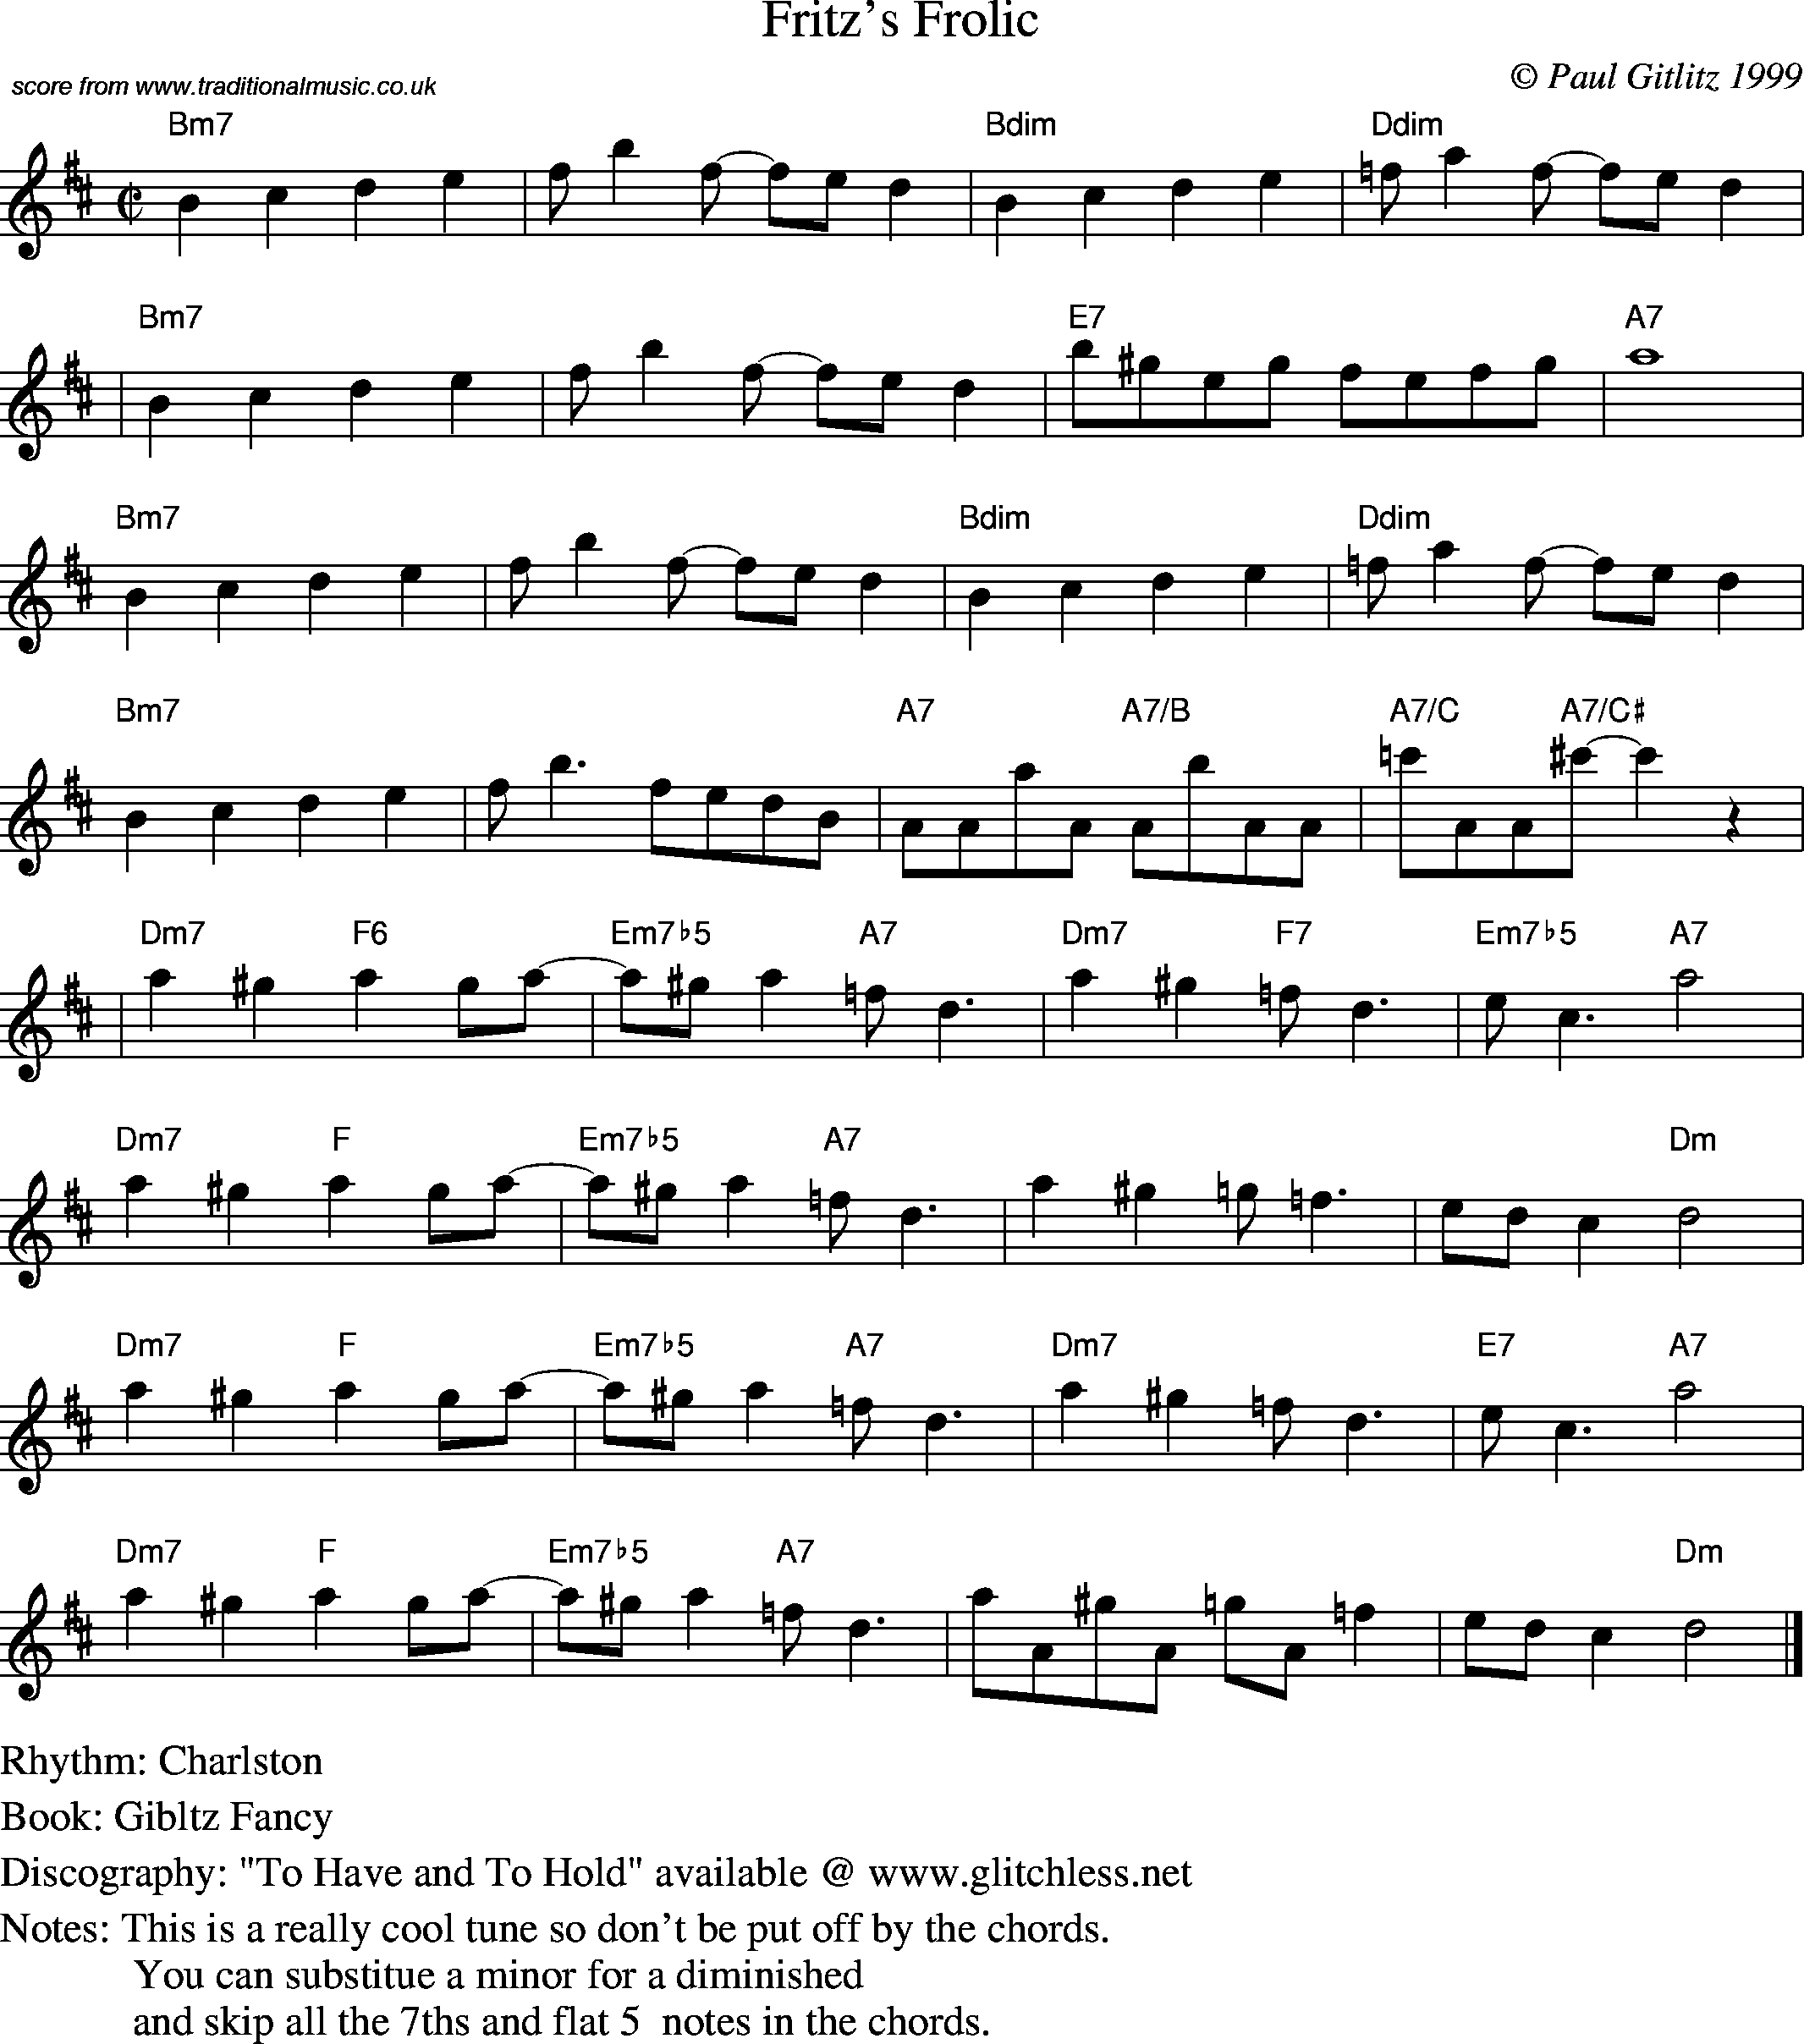 Sheet Music Score for Swing - Fritz's Frolic